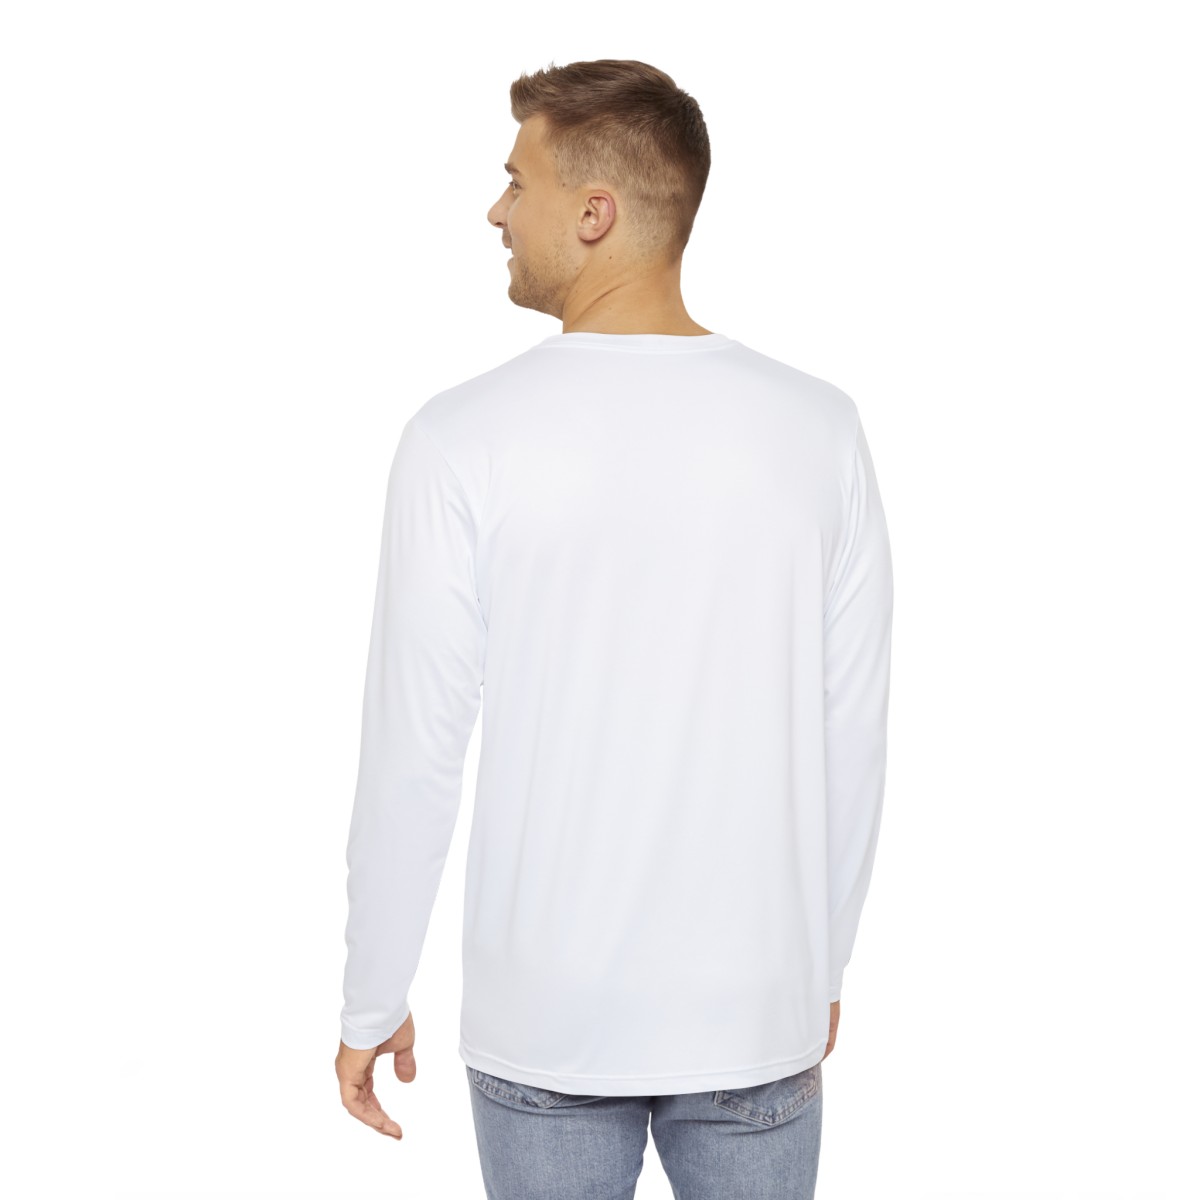 Men's Long Sleeve AOP Shirt product thumbnail image